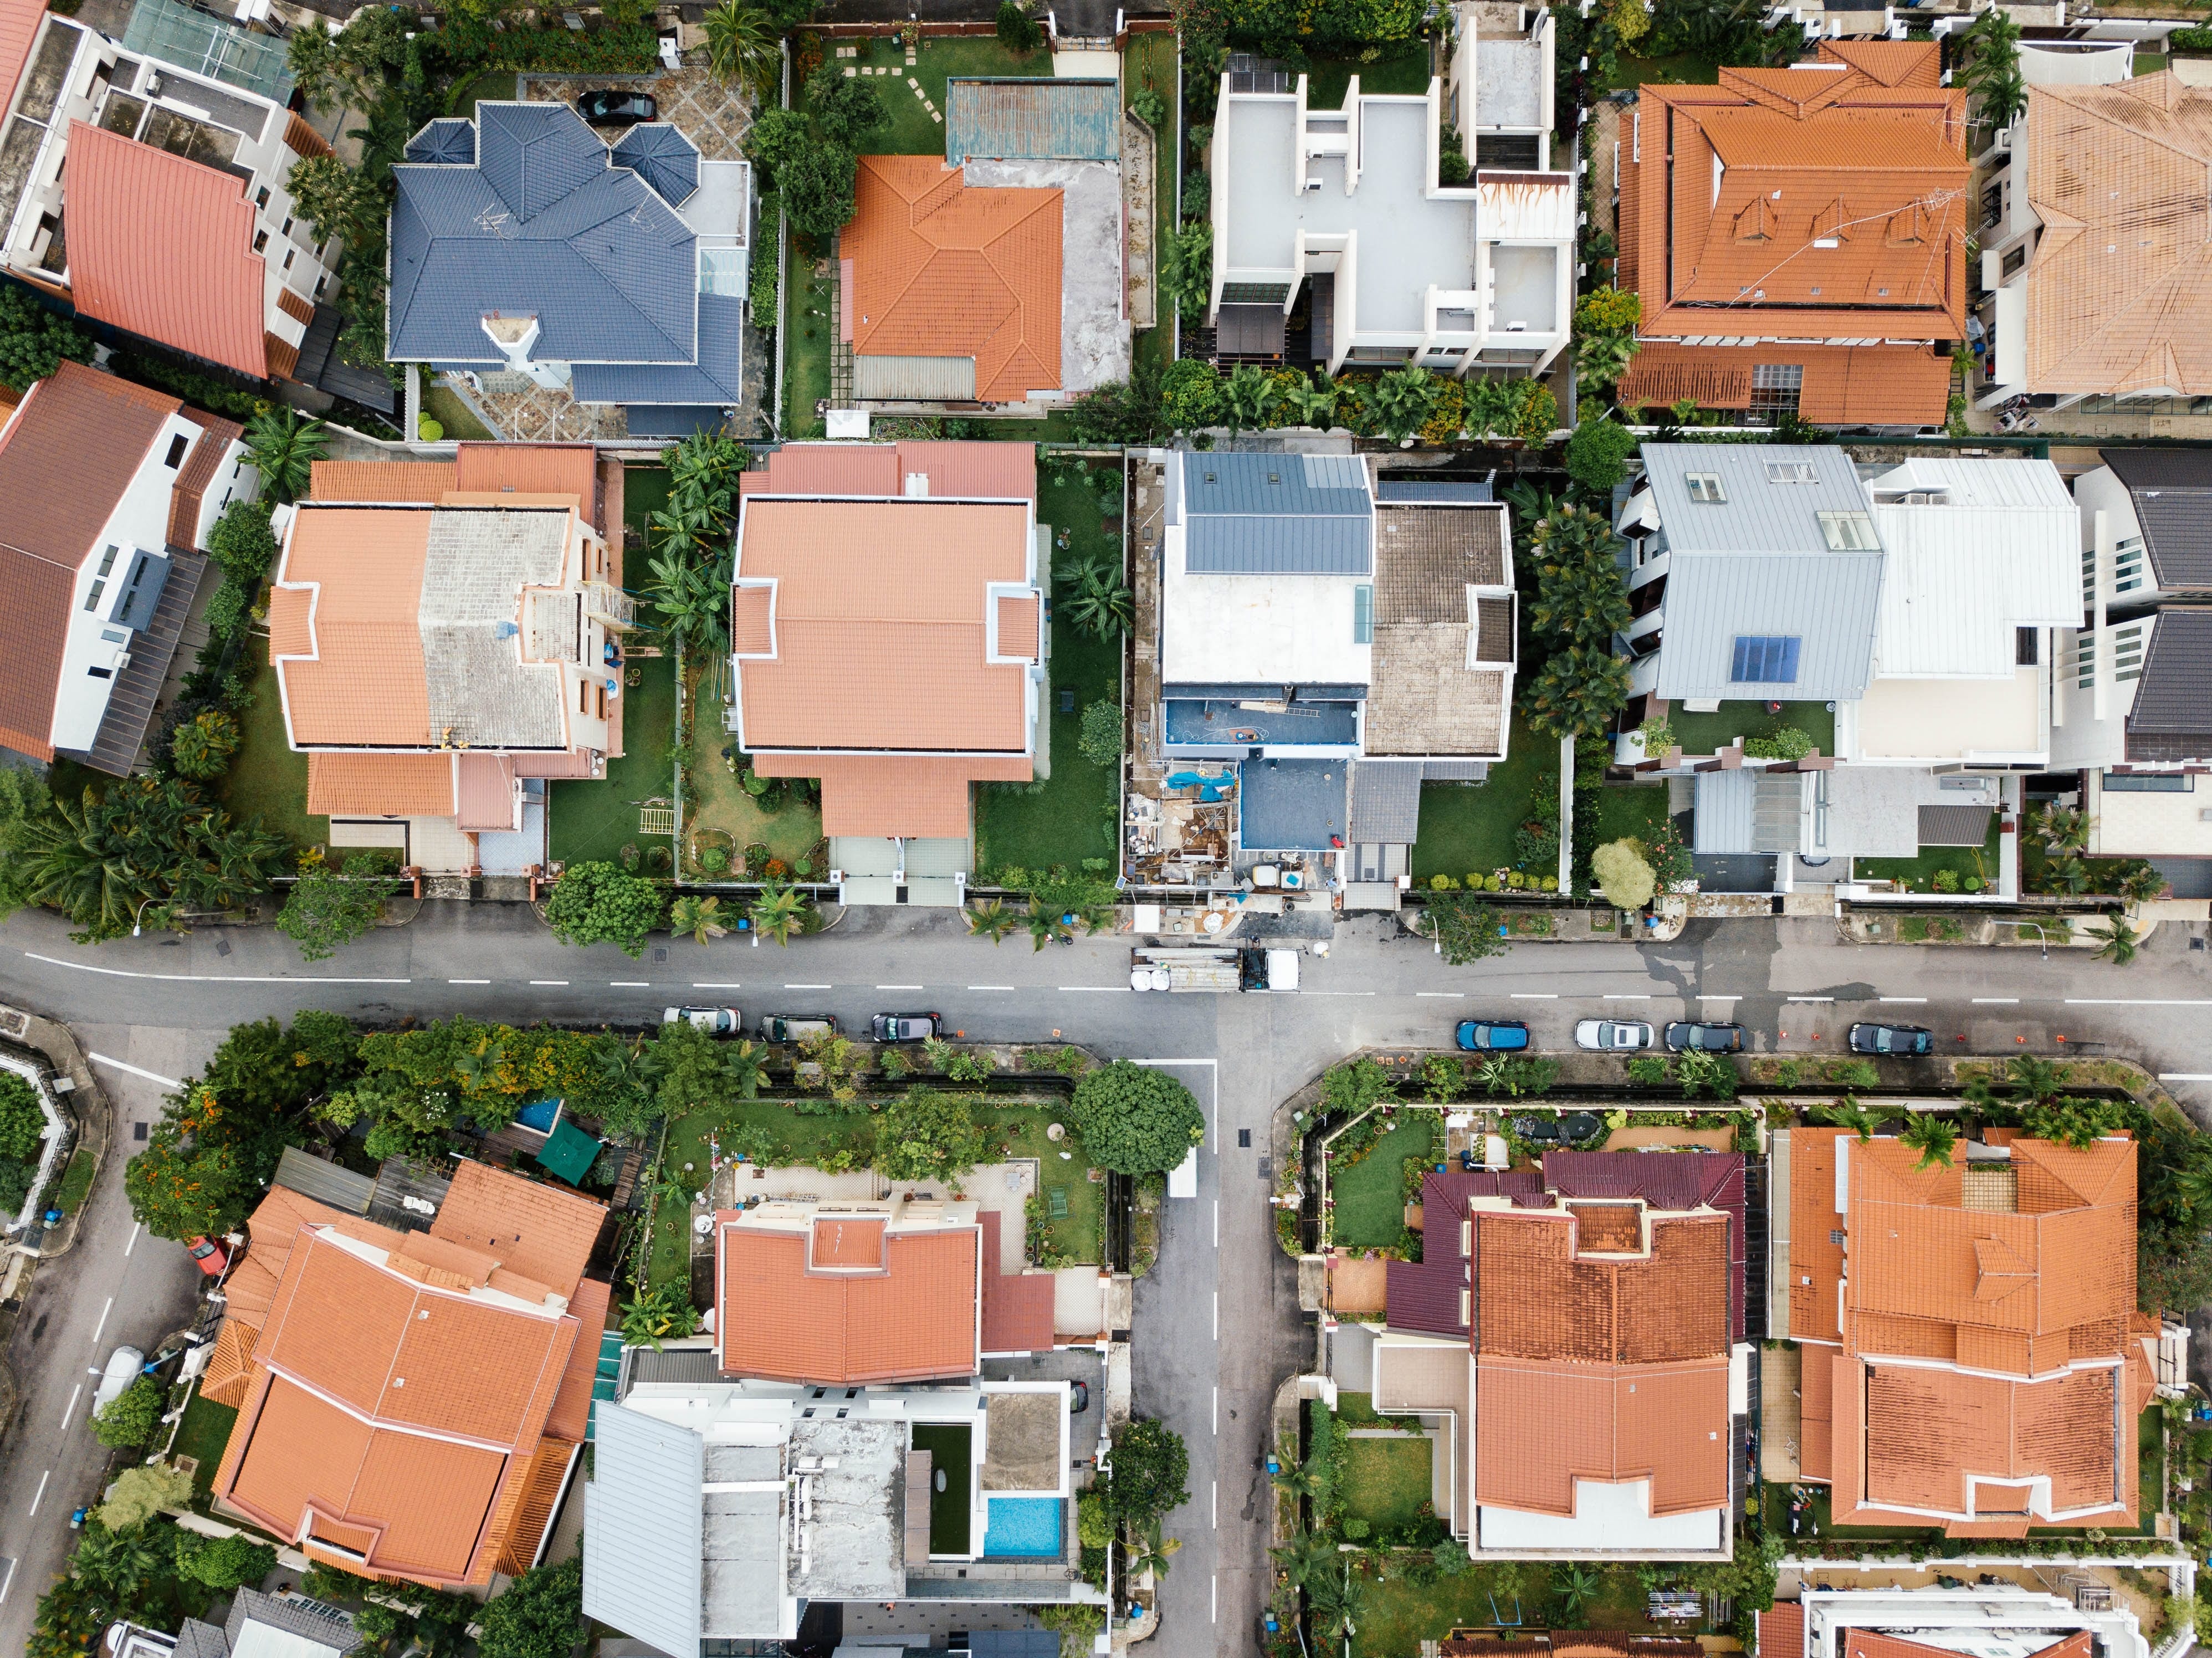 Aerial view of a neighborhood; image by chuttersnap, via Unsplash.com.